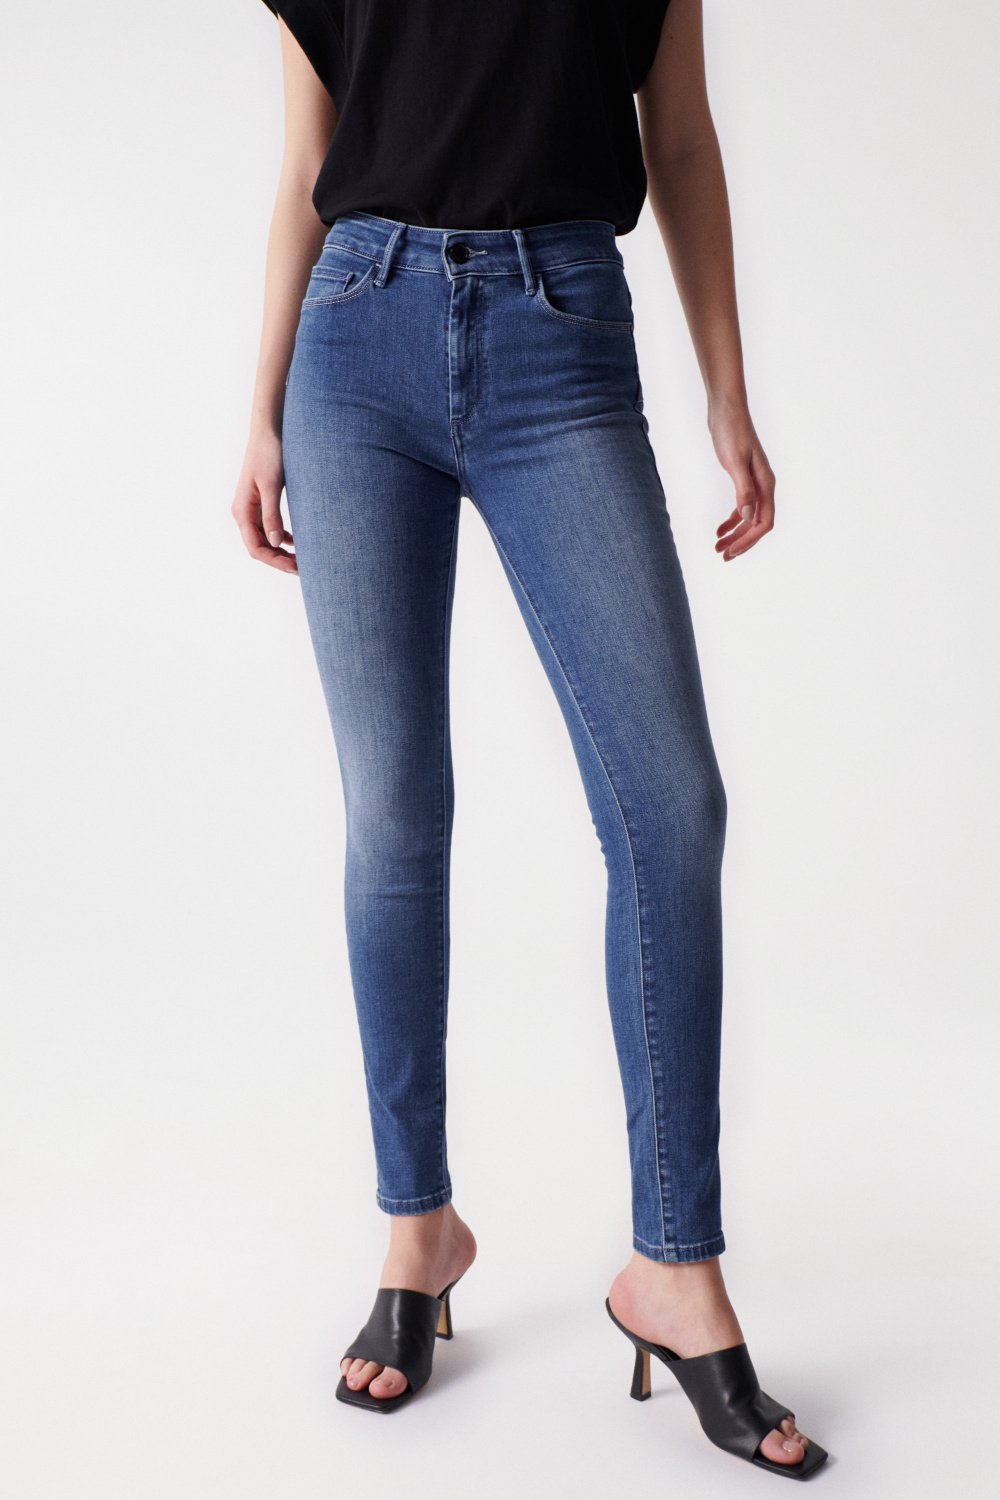 Destiny Skinny Push-Up in Medium Wash Jeans Salsa Jeans   